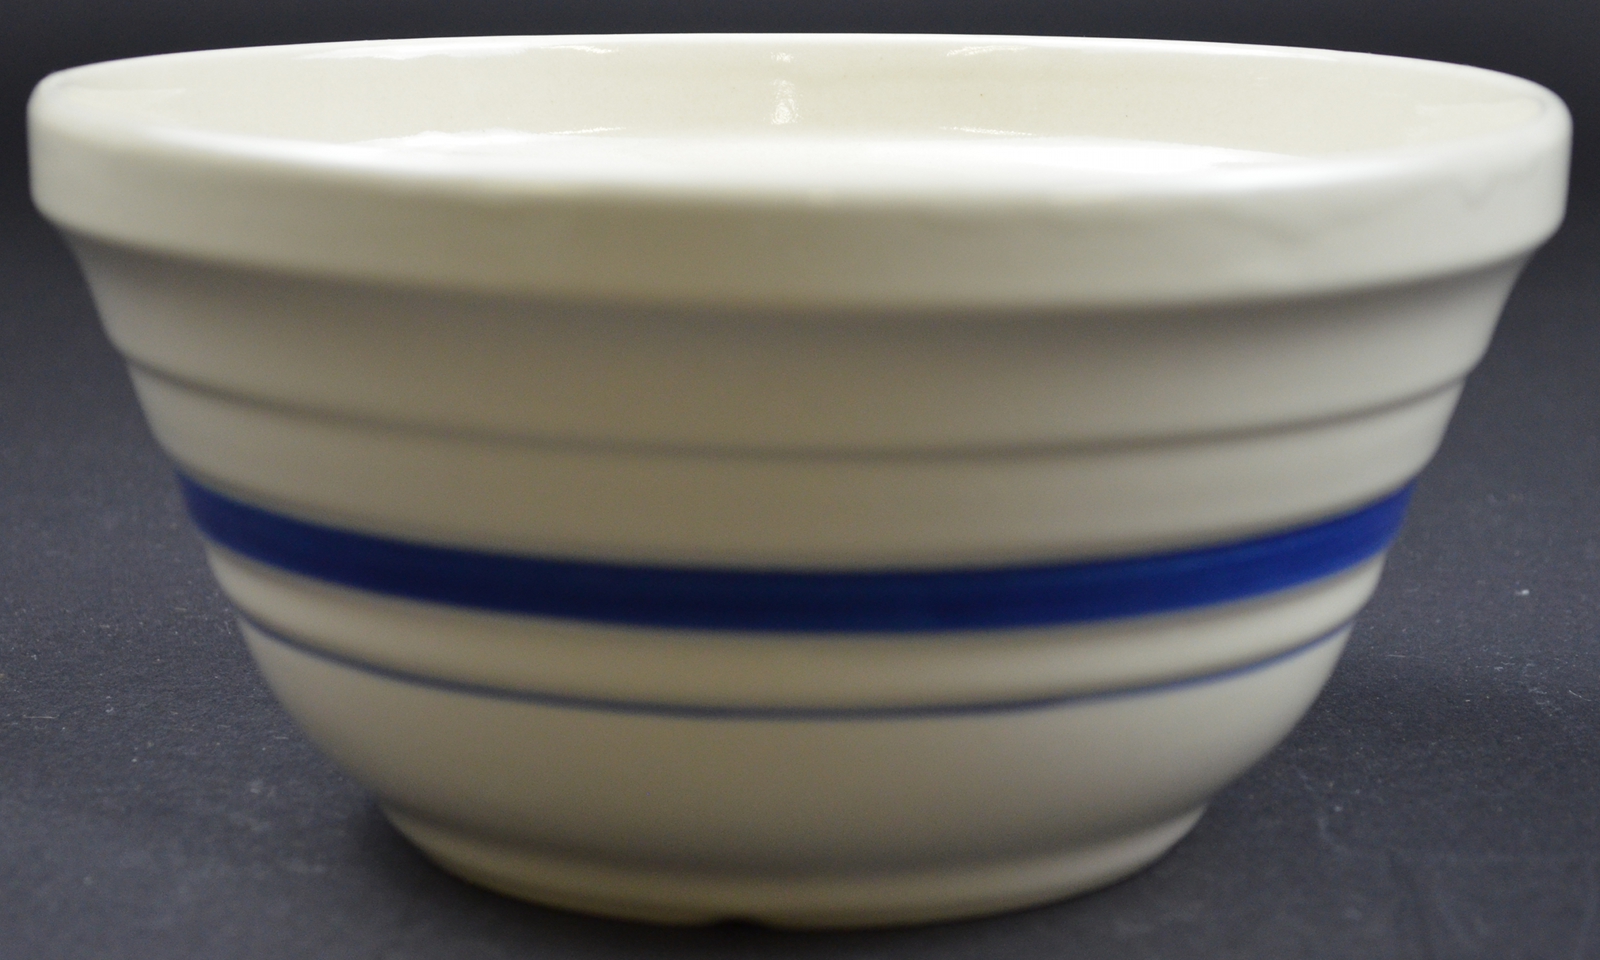 Pfaltzgraff Starburst Ceramic Muffin Tray, 12-Inch, Starburst Blue